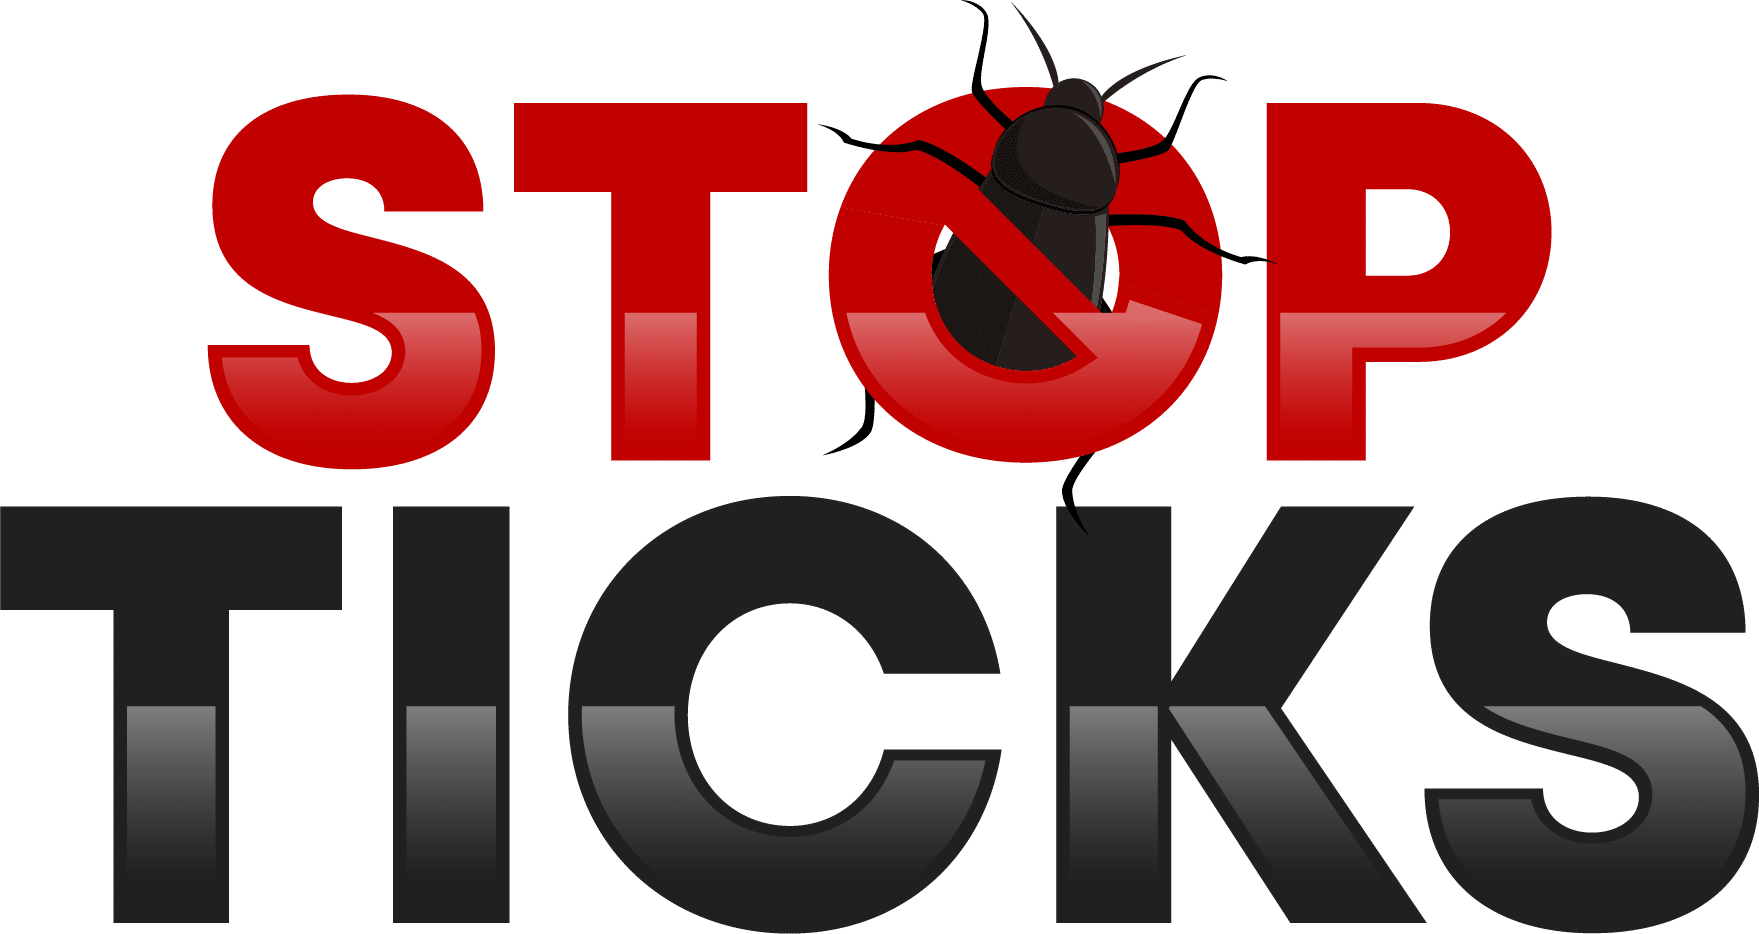 Stop Ticks